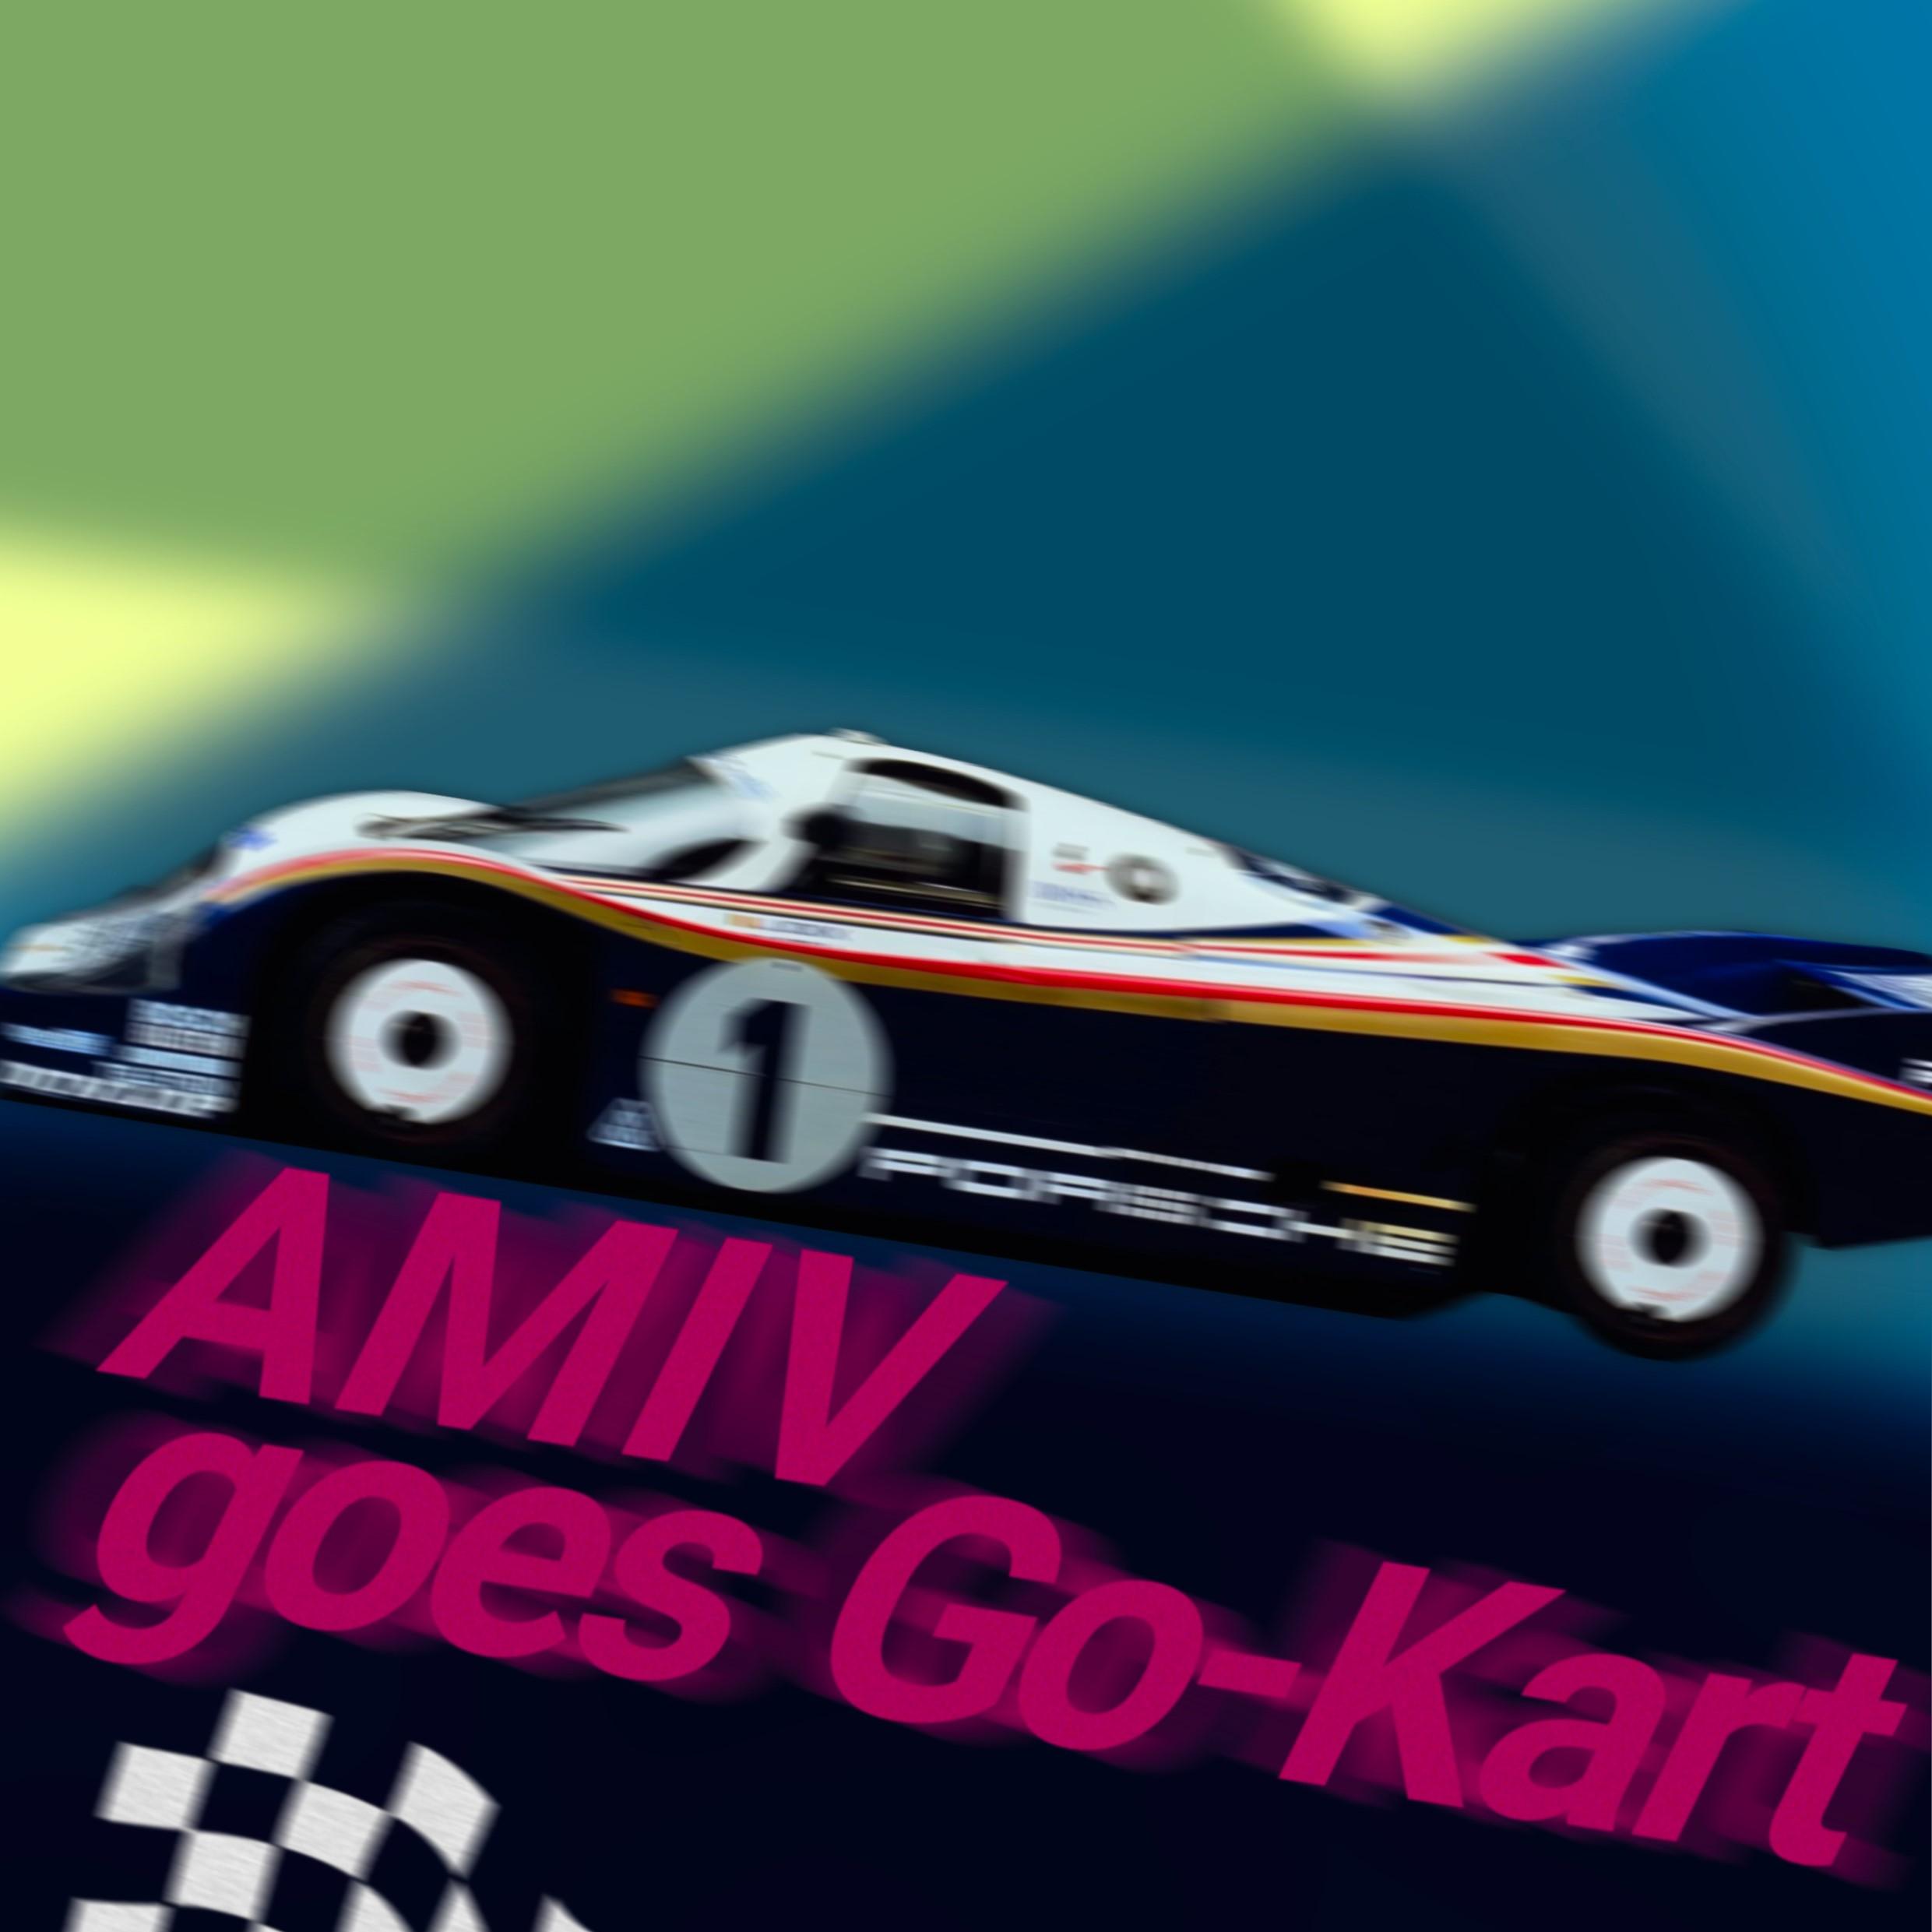 AMIV goes Go-Kart FS24